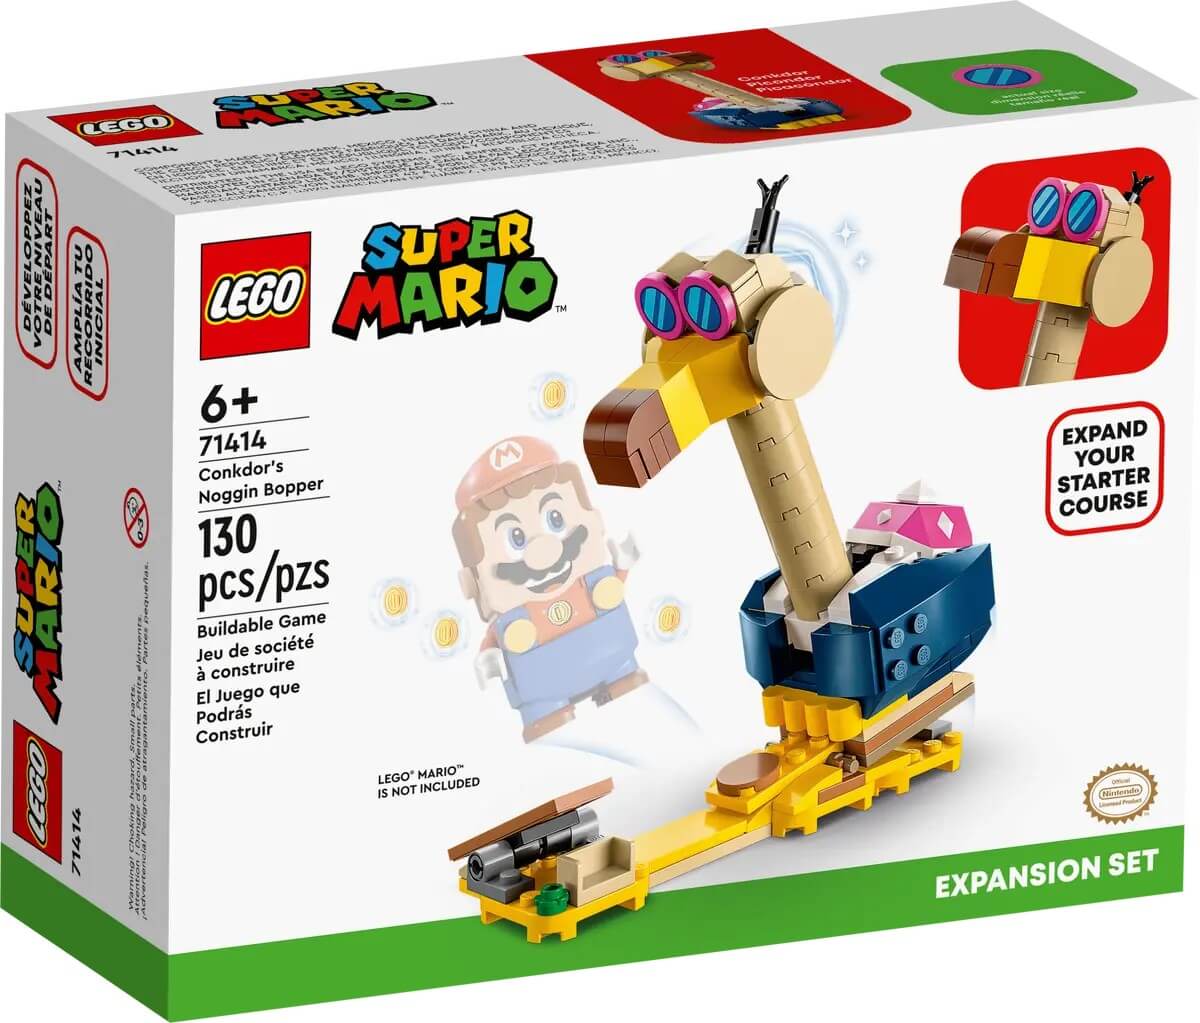 Фигурка-конструктор Lego Super Mario Conkdor's Noggin Bopper Expansion Set 71414, 130 деталей lego 71409 big spike’s cloudtop challenge expansion set